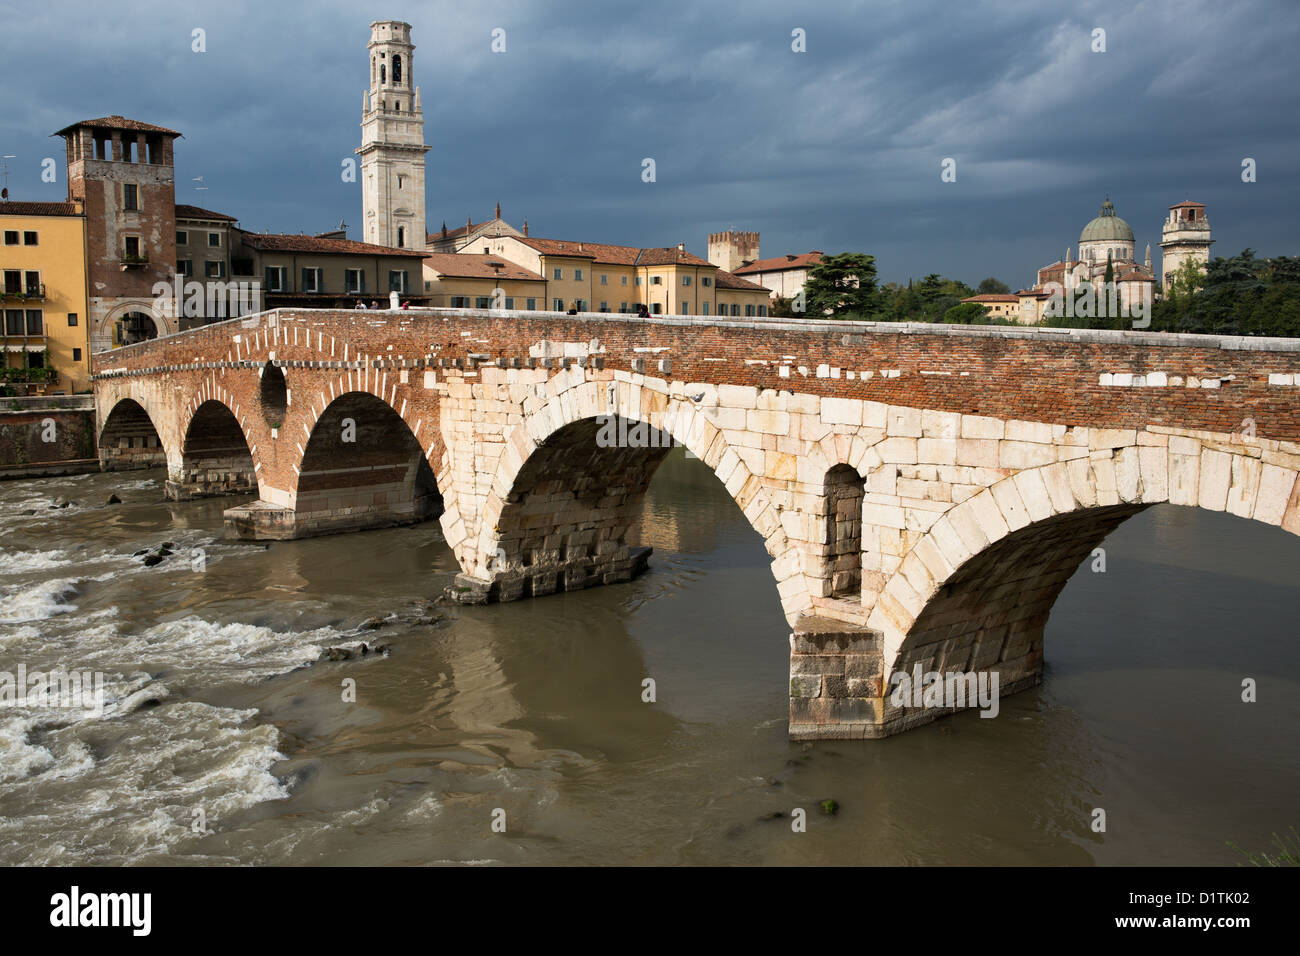 Saint Peter bridge and Adige river in Verona, Italy Stock Photo